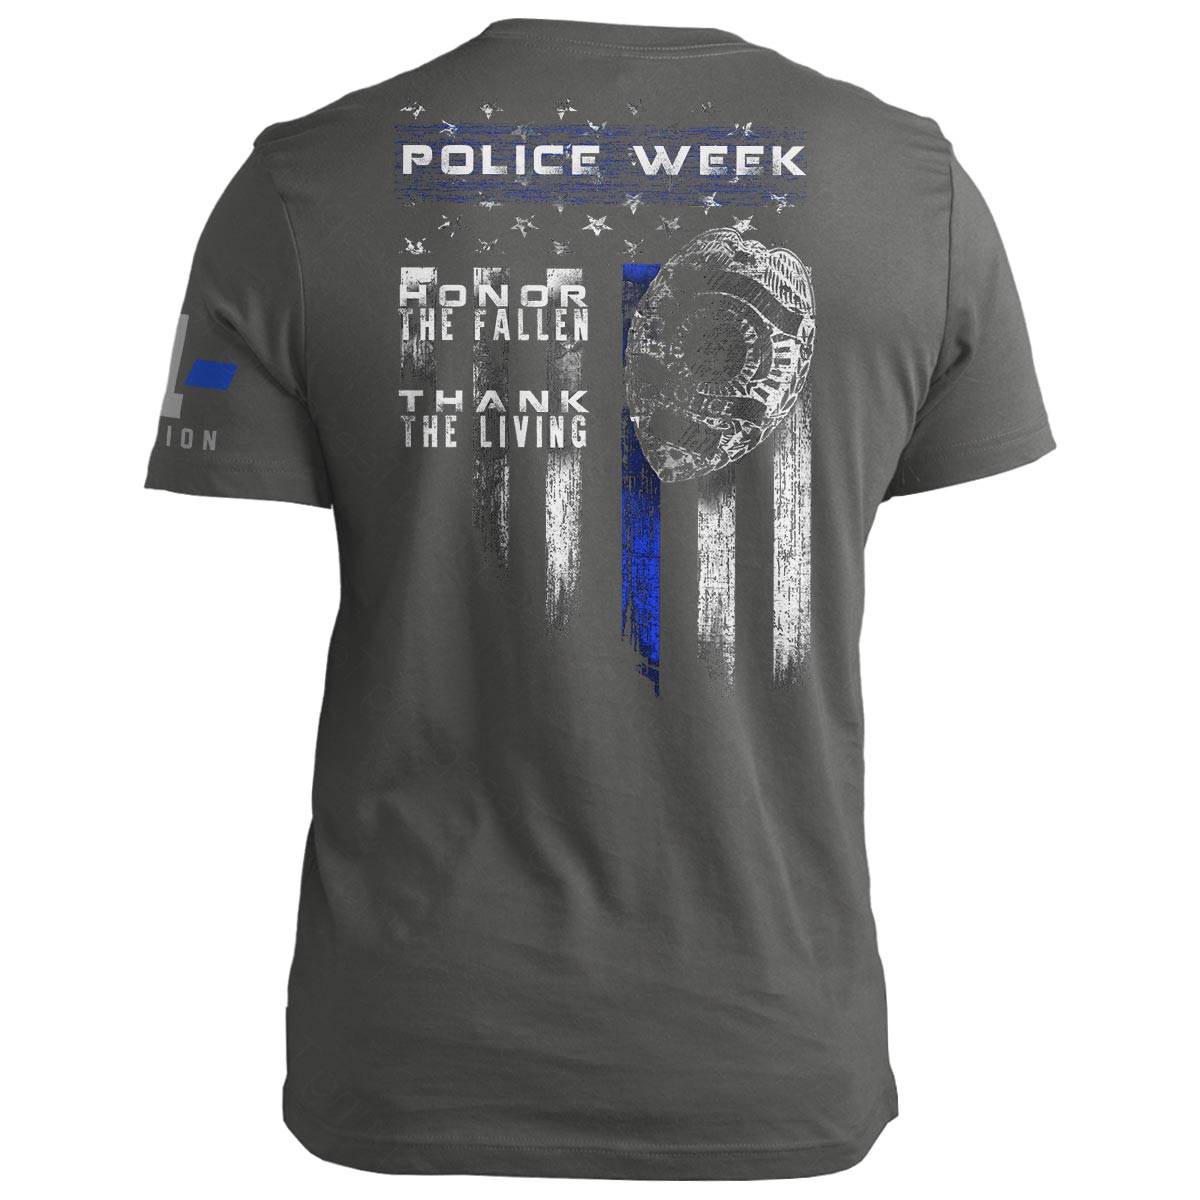 Police Week: Honor The Fallen